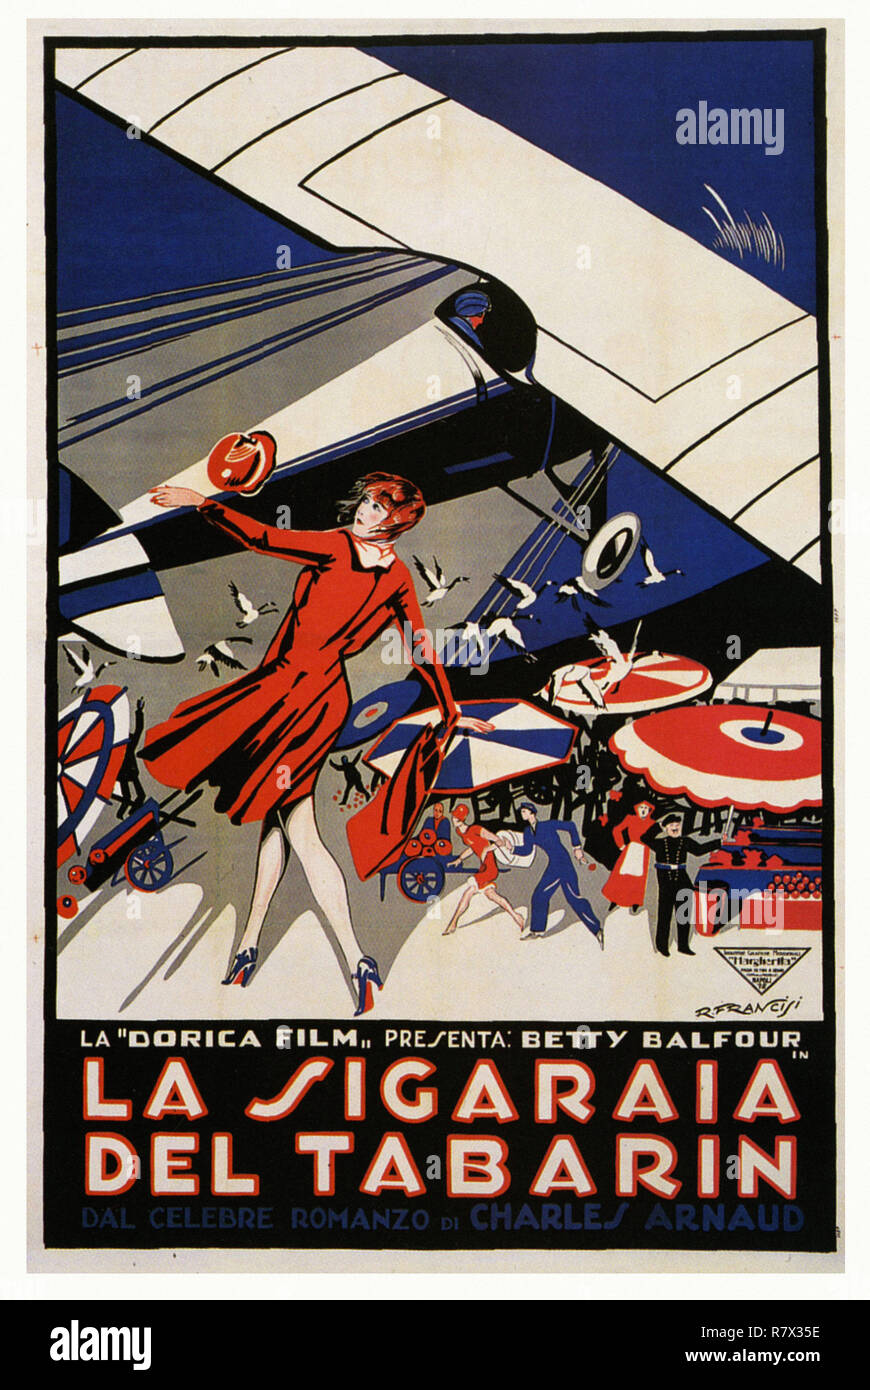 La Sigaraia Del Tabarin - Vintage Travel Poster Stock Photo